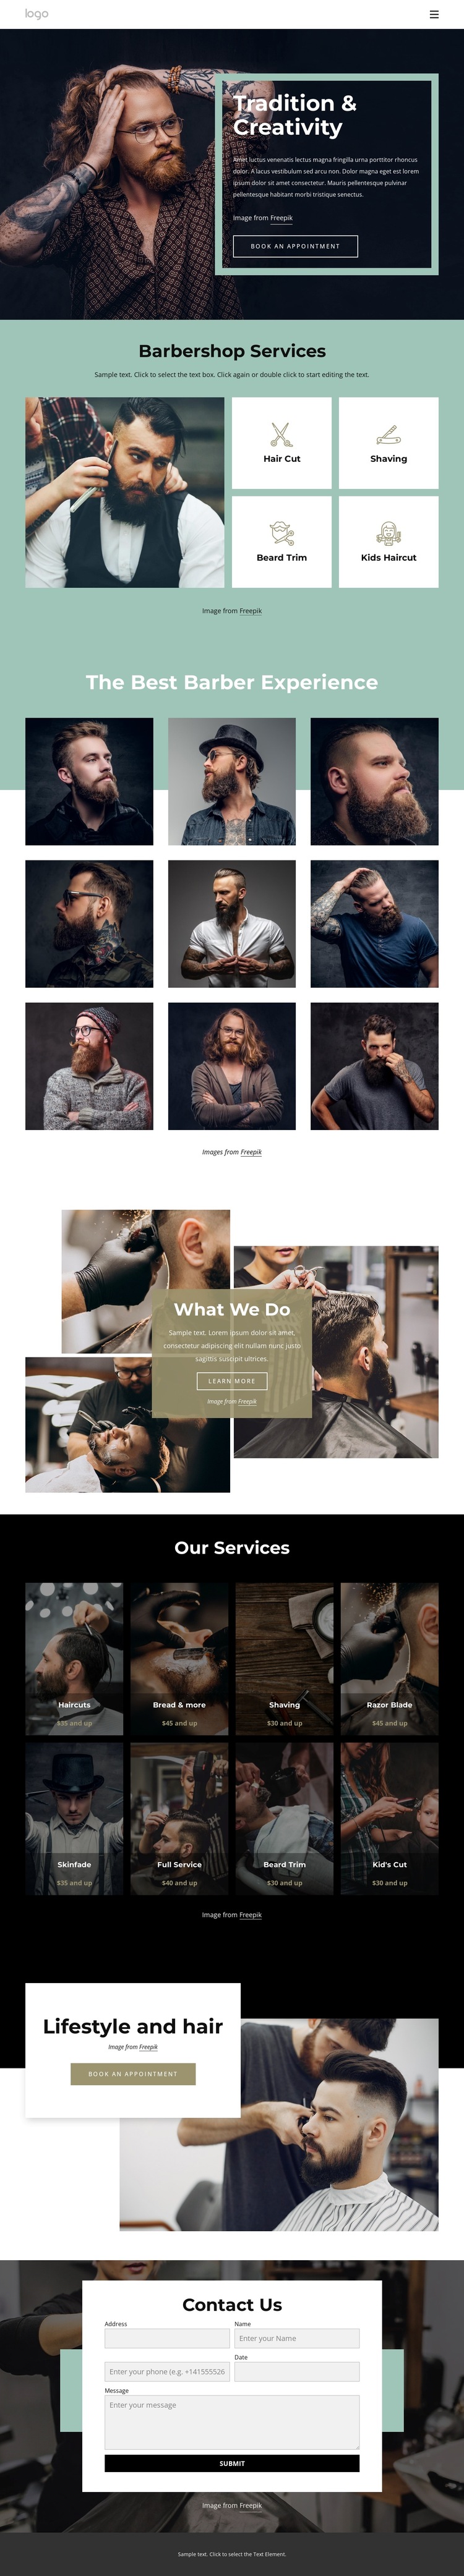 Public barber salon HTML5 Template